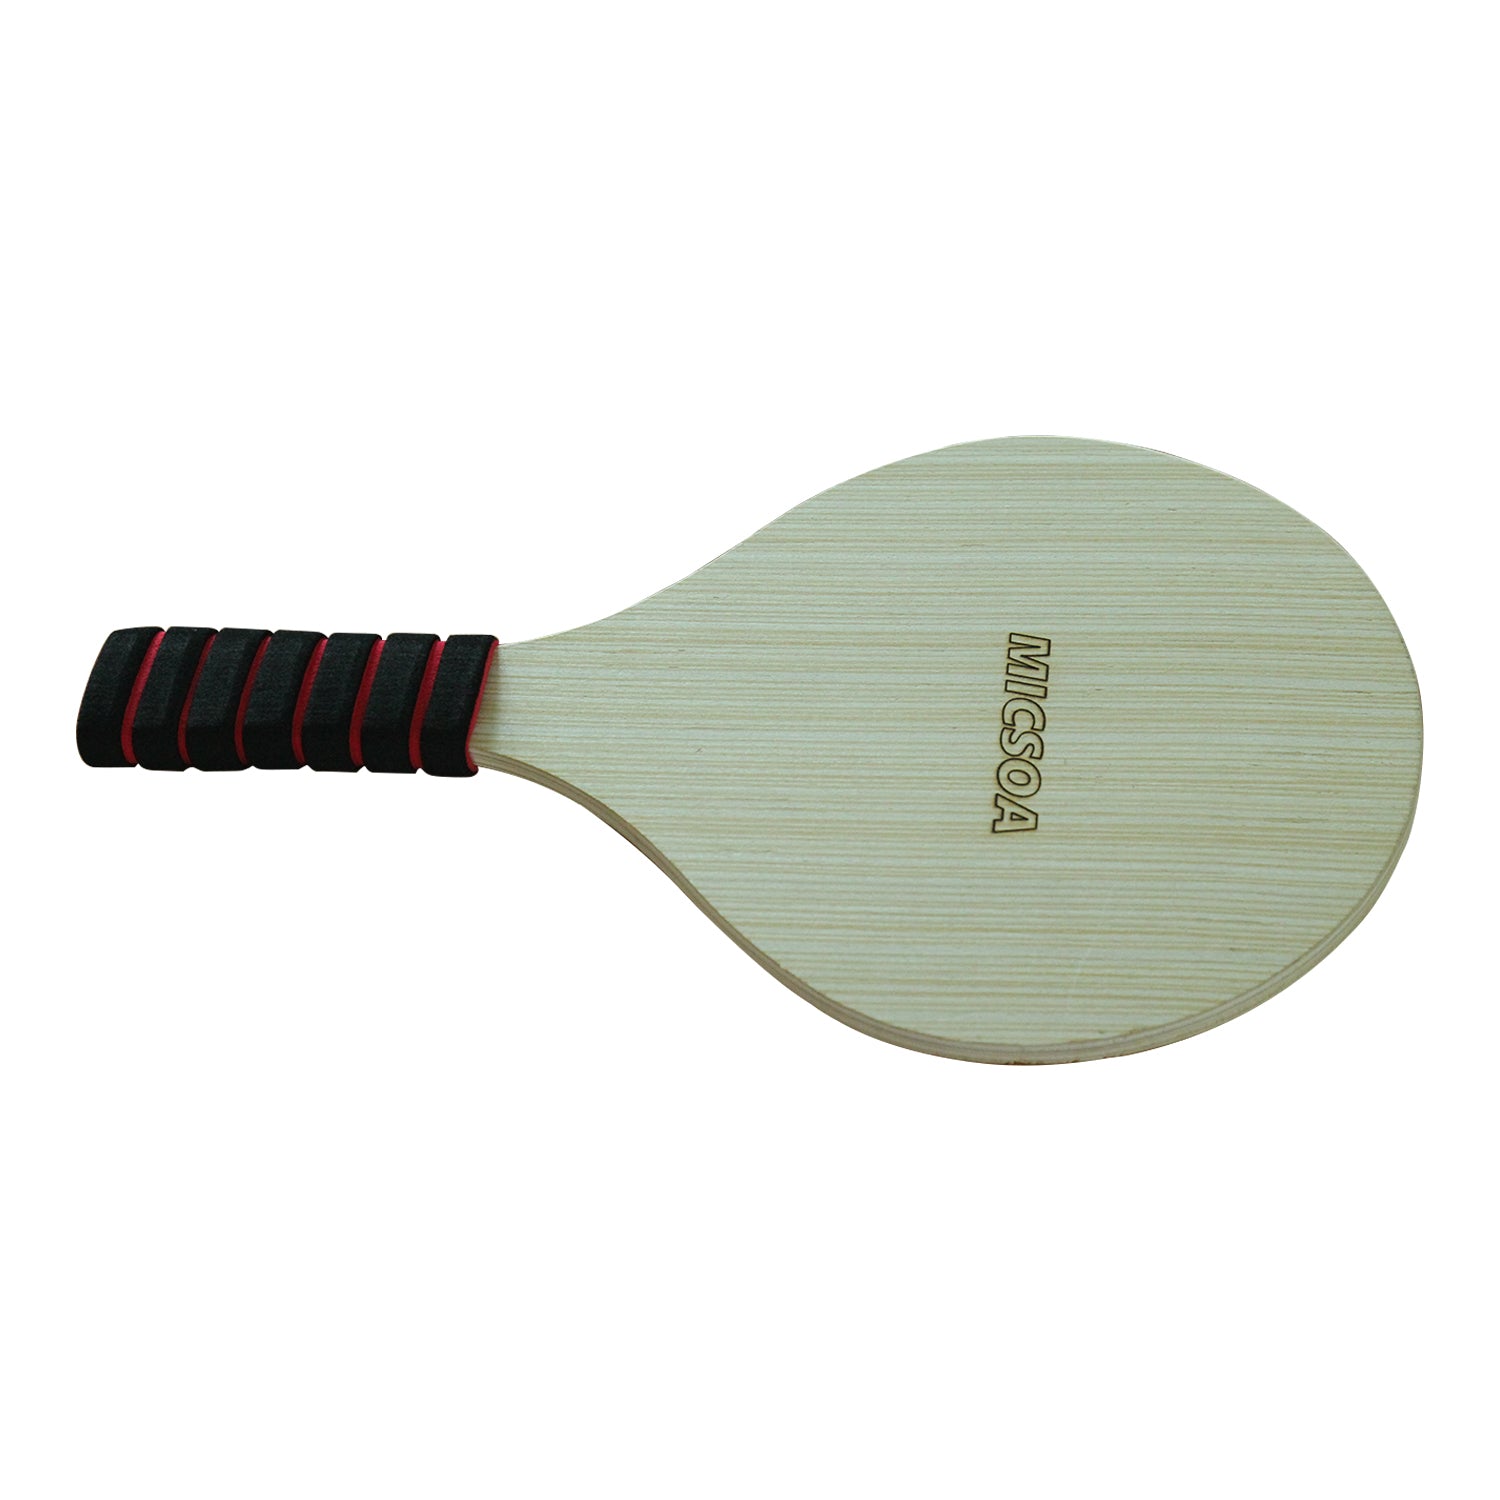 MICSOA Wooden Paddle Balls